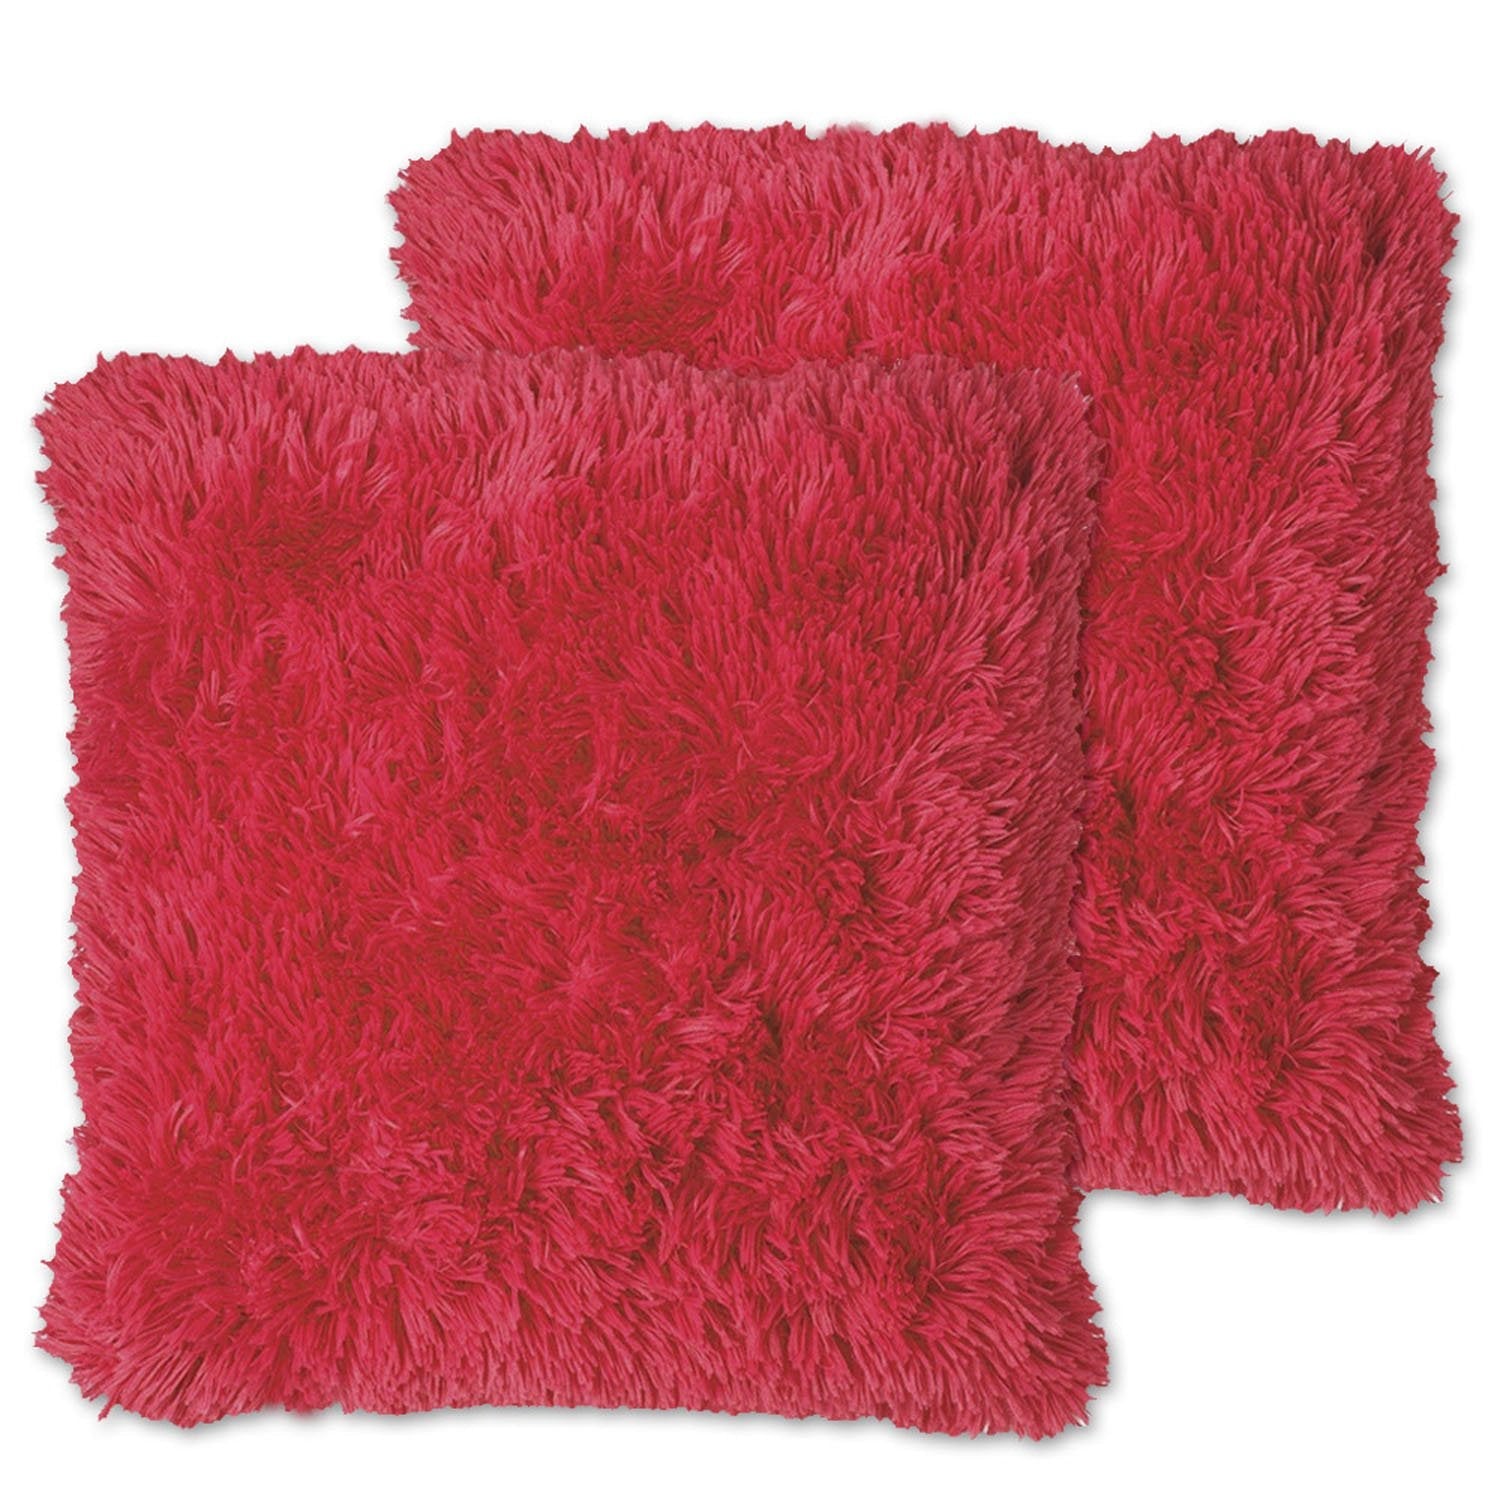 Decorative Plush Throw Pillows Red - Top